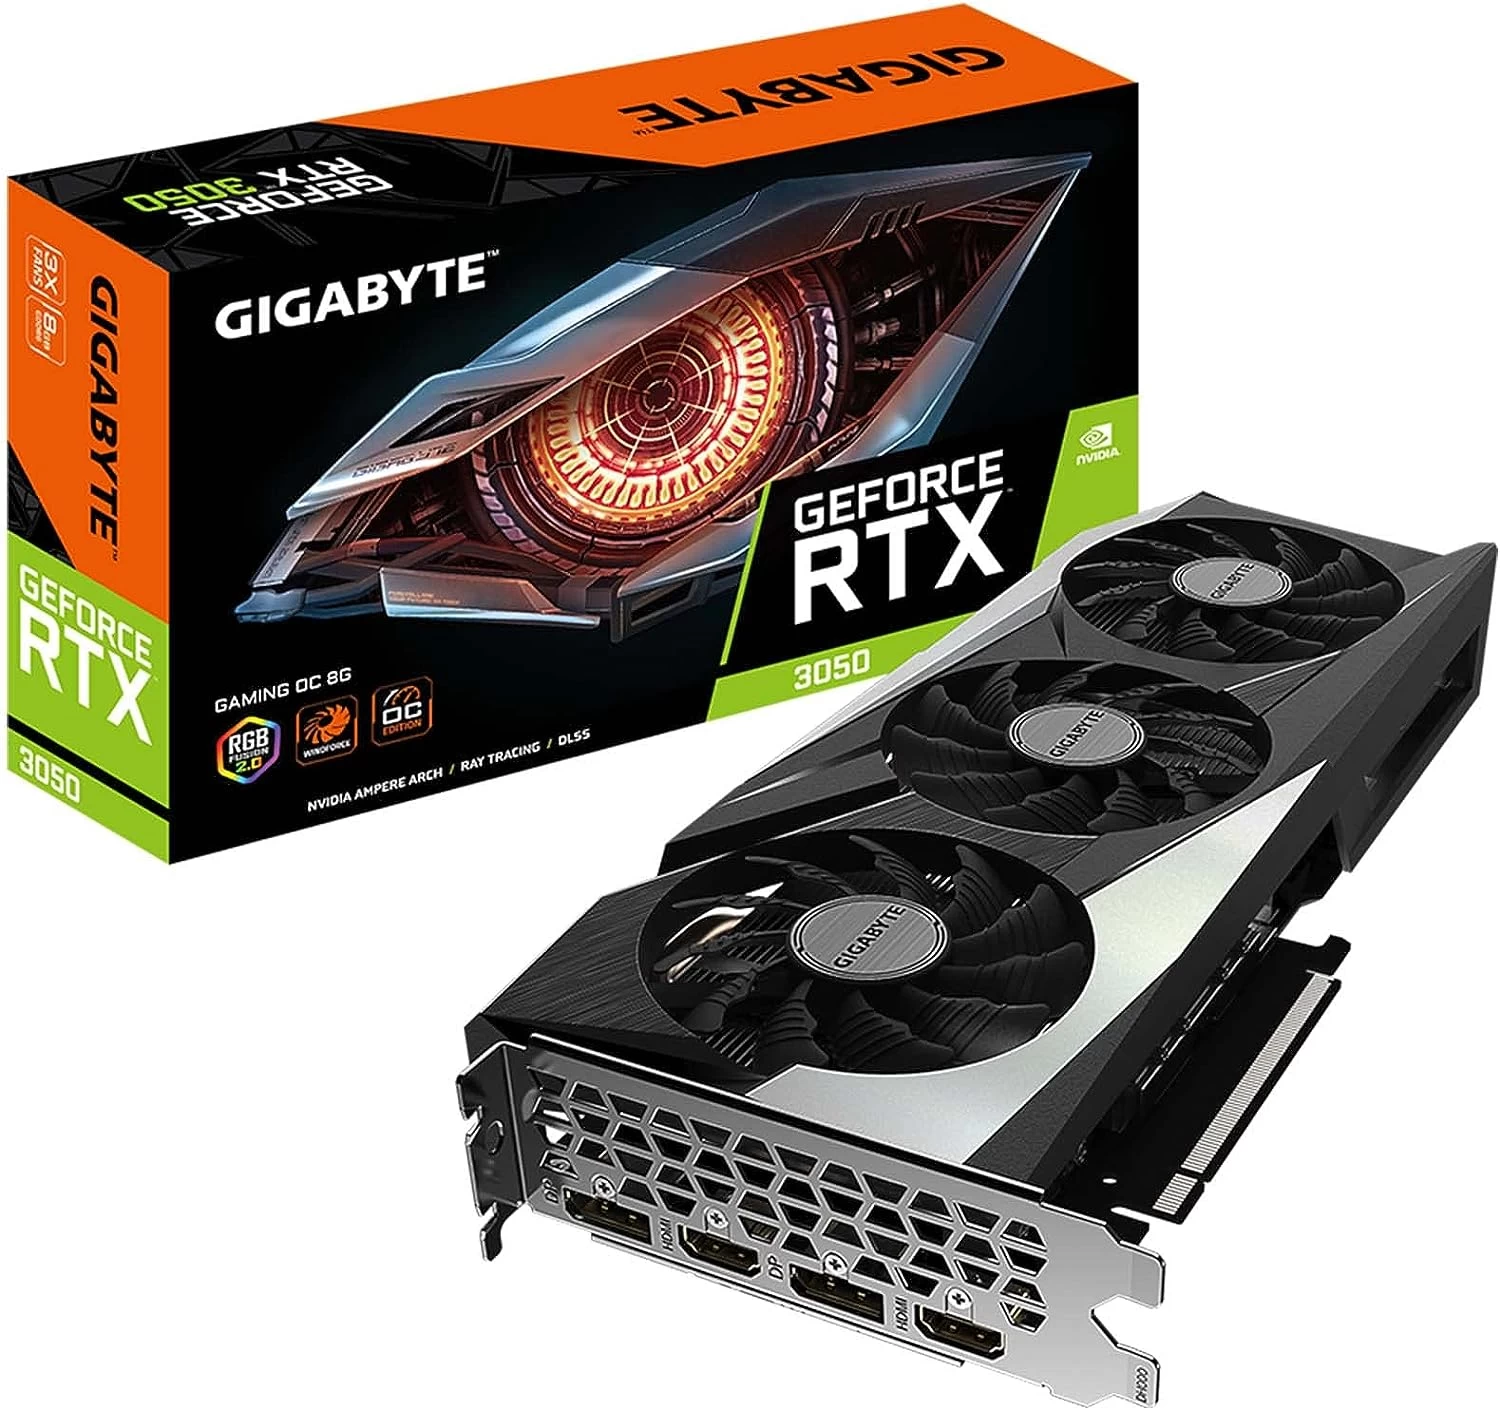 Gigabyte GeForce RTX 3050 GAMING OC 8G Package